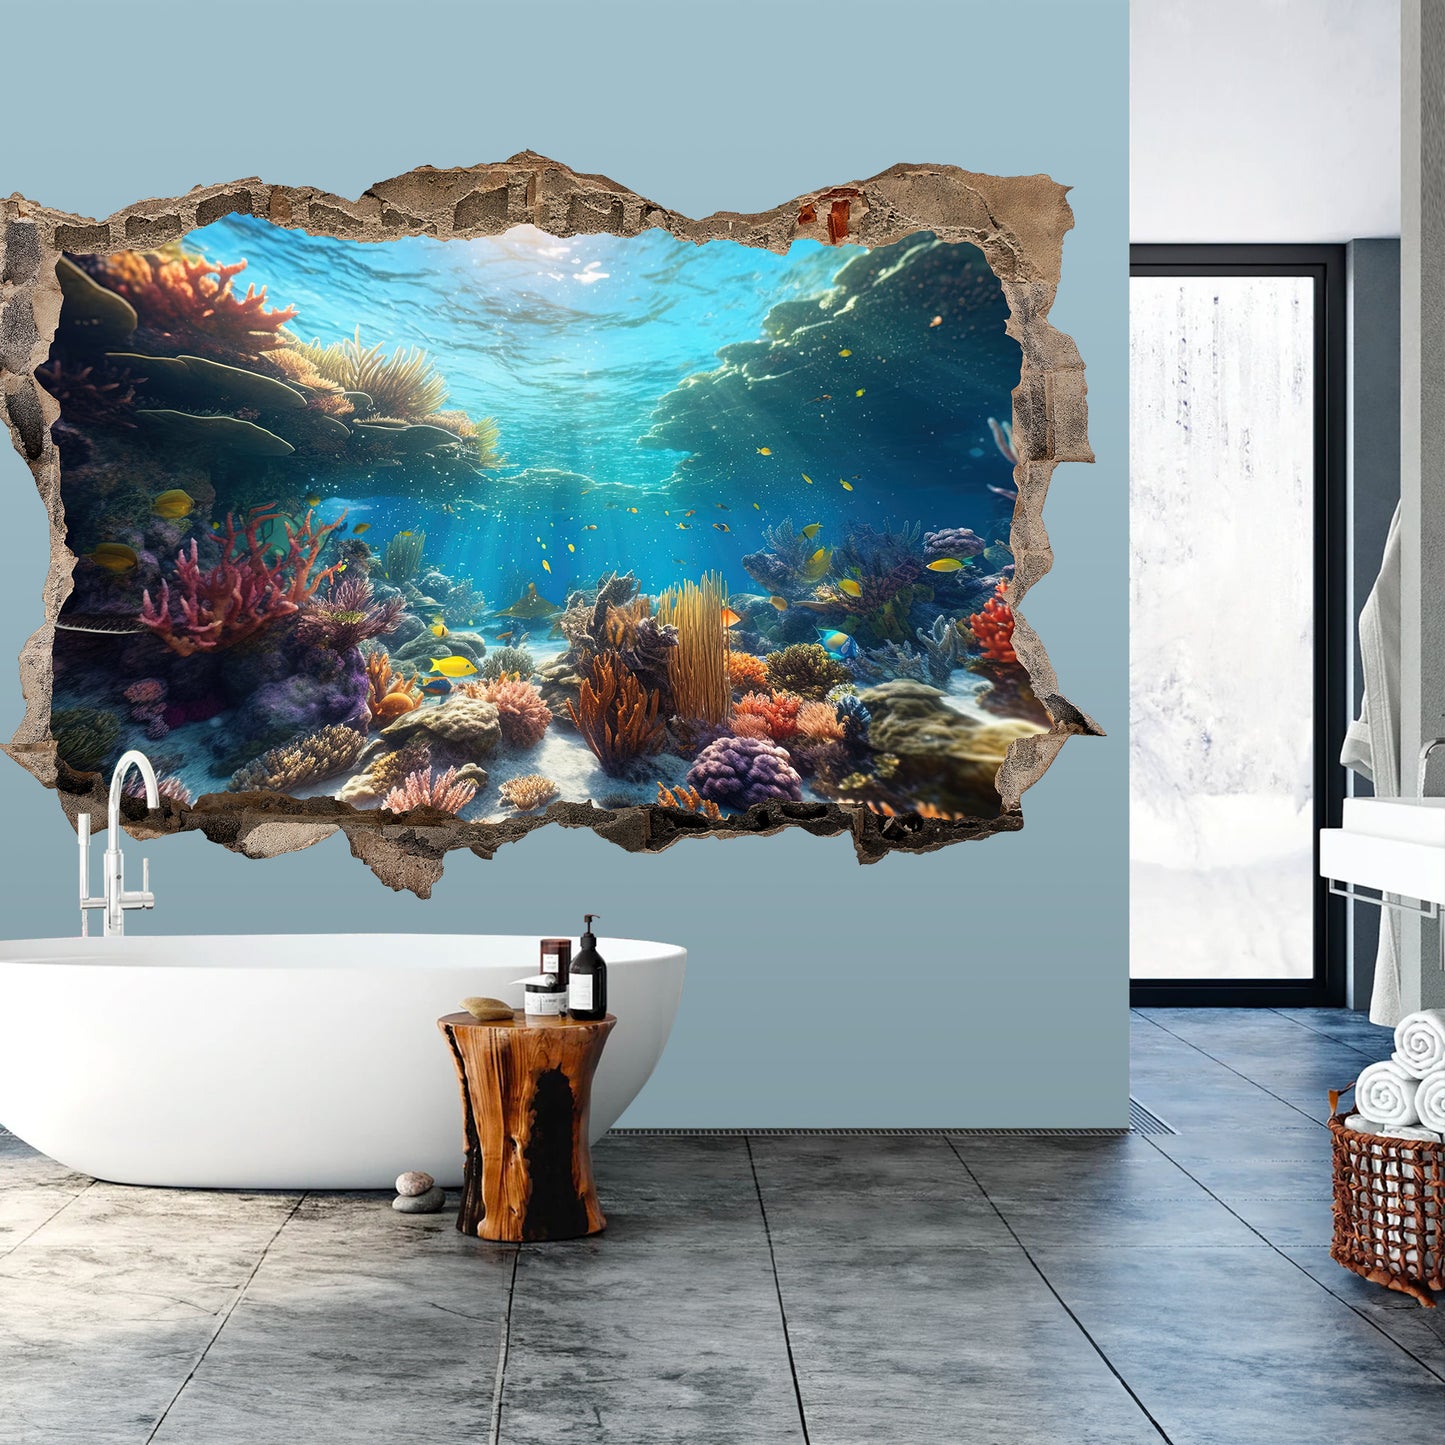 Undersea Wonderland 3D Wall Decal - Colorful Ocean World Behind Broken Wall - BW013